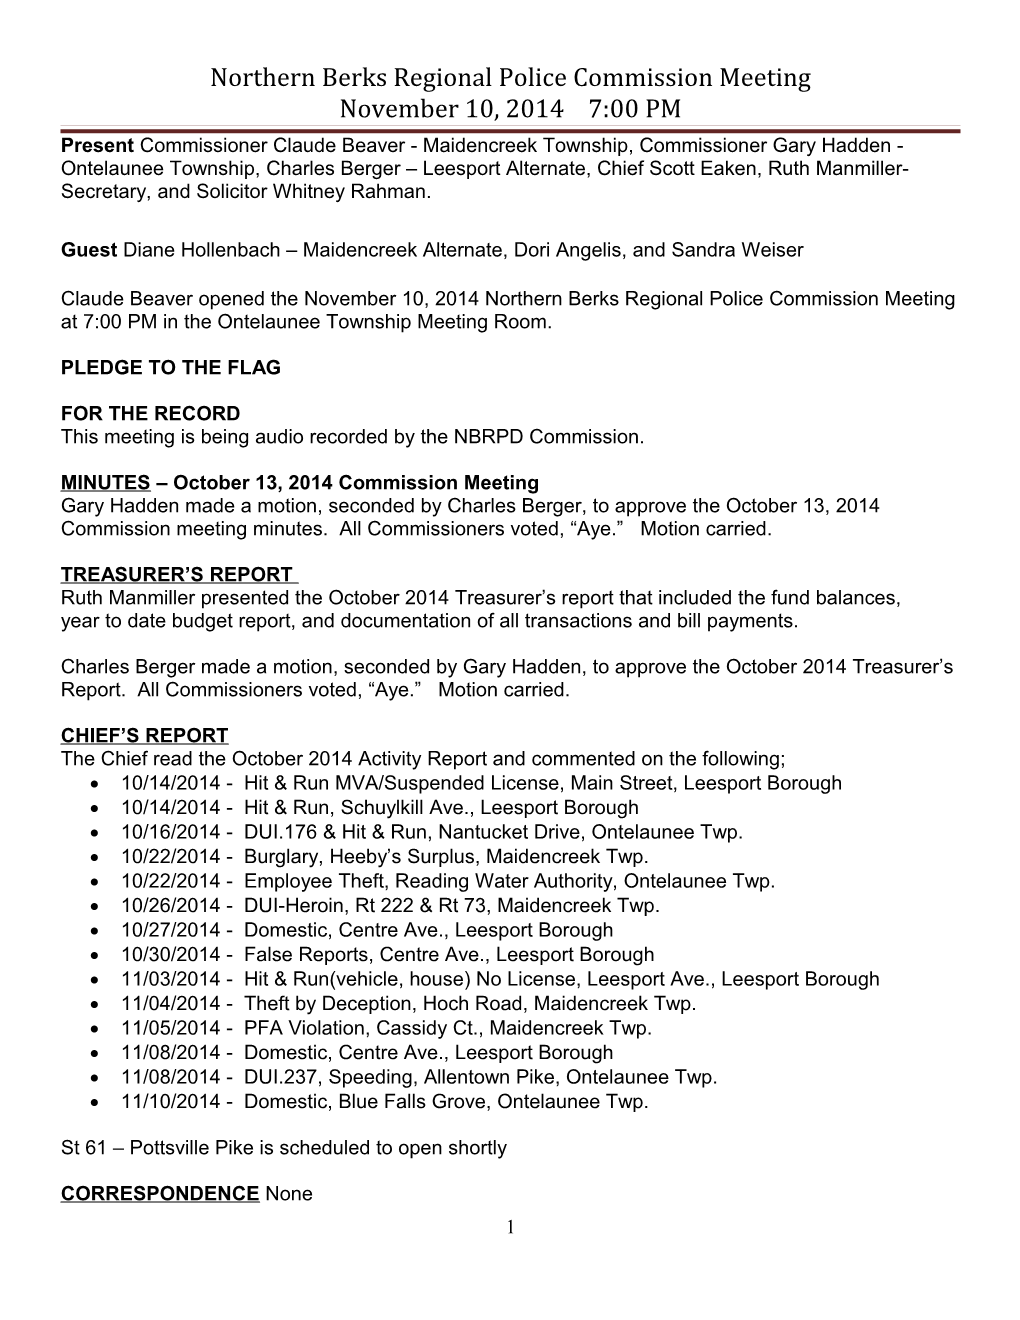 Northern Berks Regional Police Commission Meeting November 10, 2014 7:00 PM